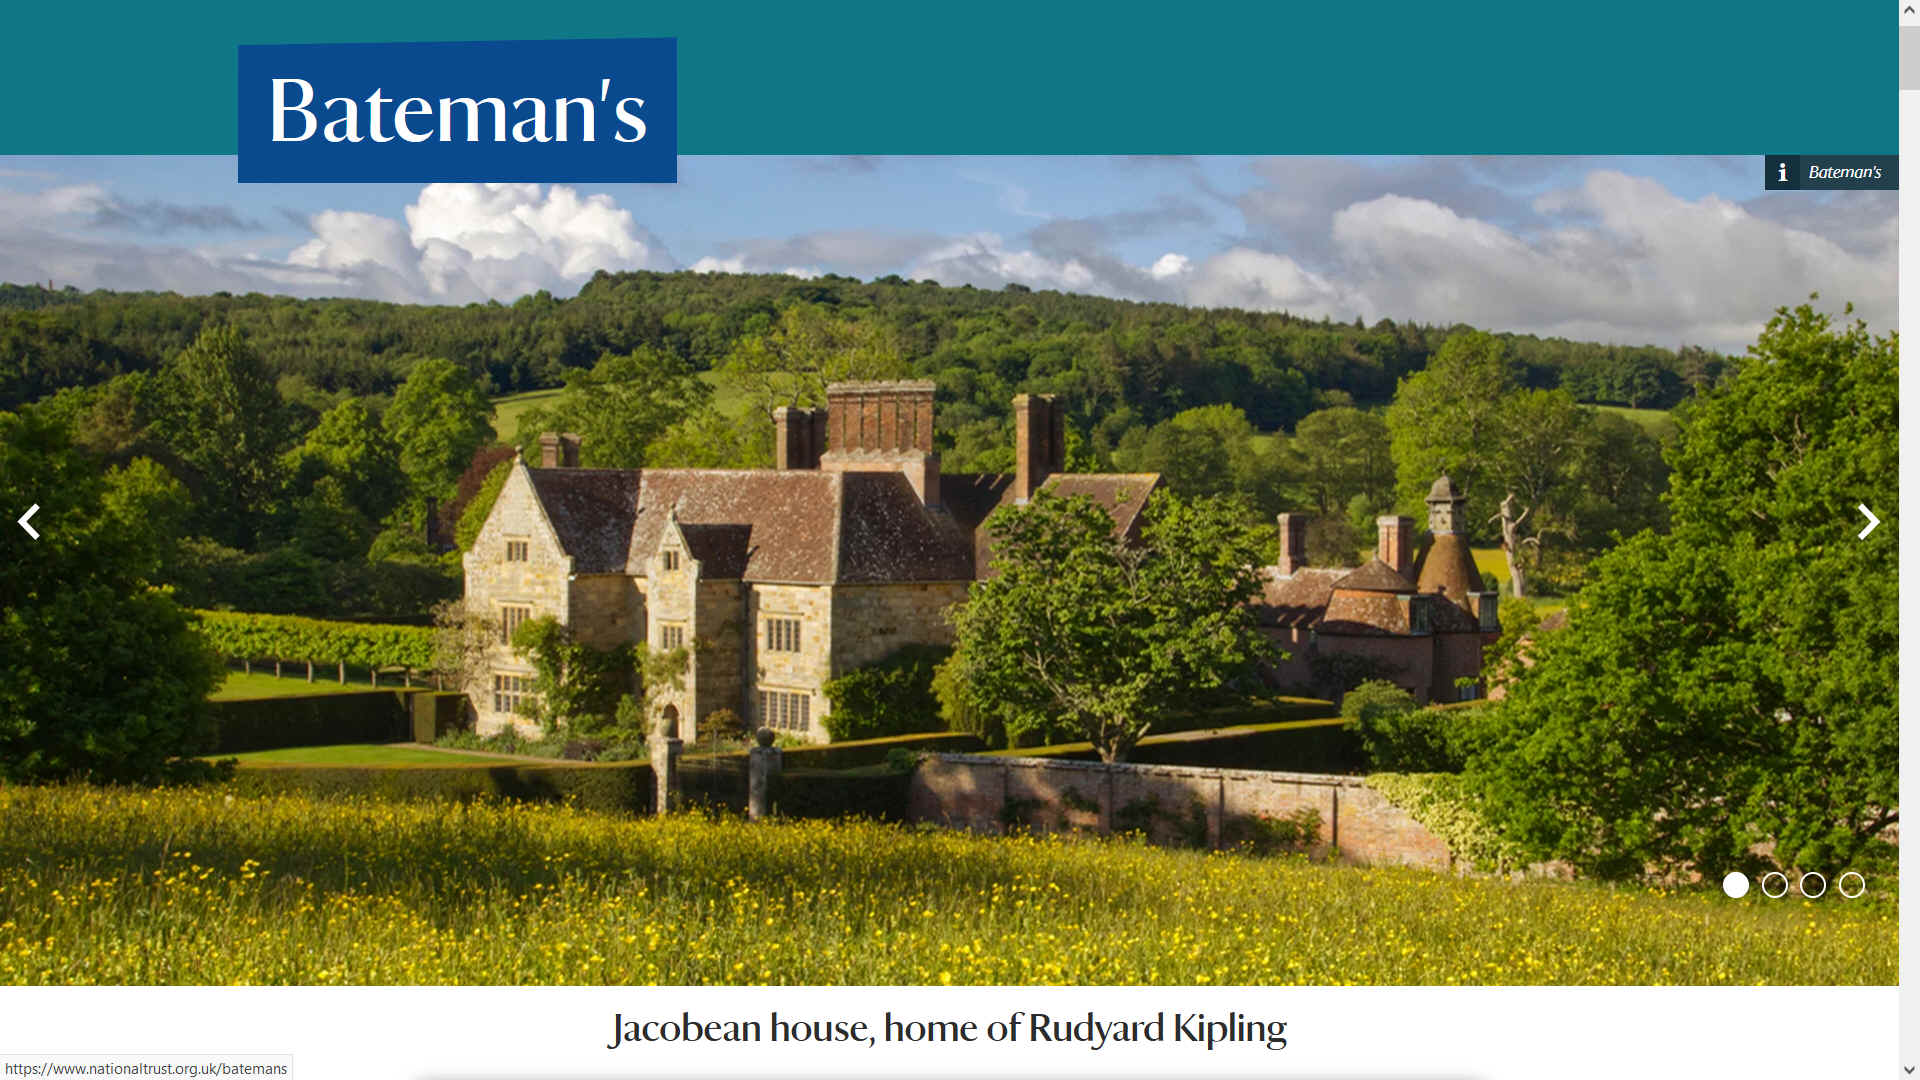 Batemans at Burwash, is Rudyard Kipling's house, a National Trust property